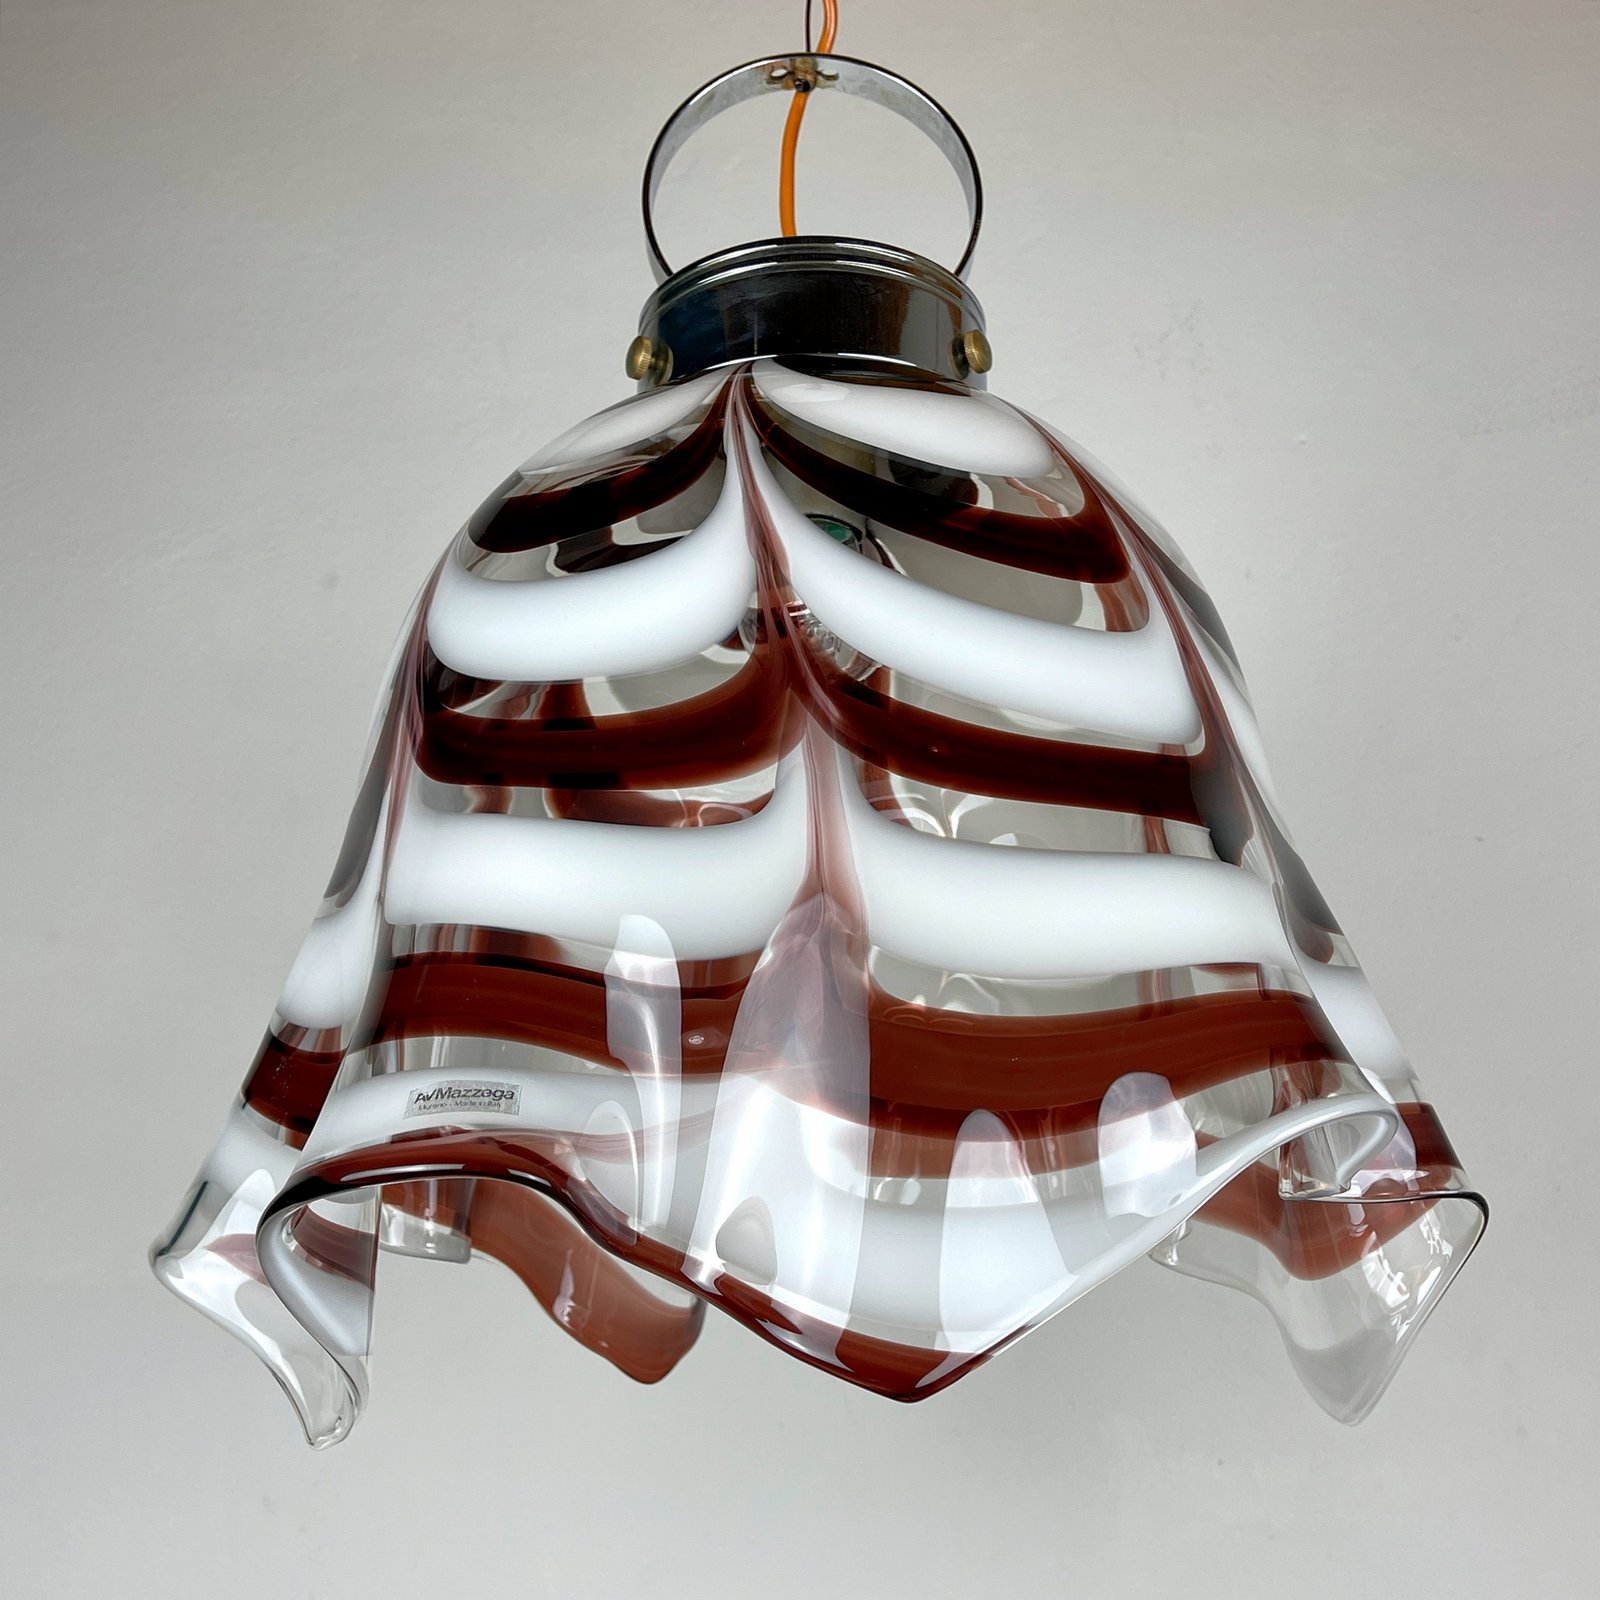 Original murano glass brown pendant lamp Fazzoletto by AV Mazzega Italy 1970s Vintage italian lighting